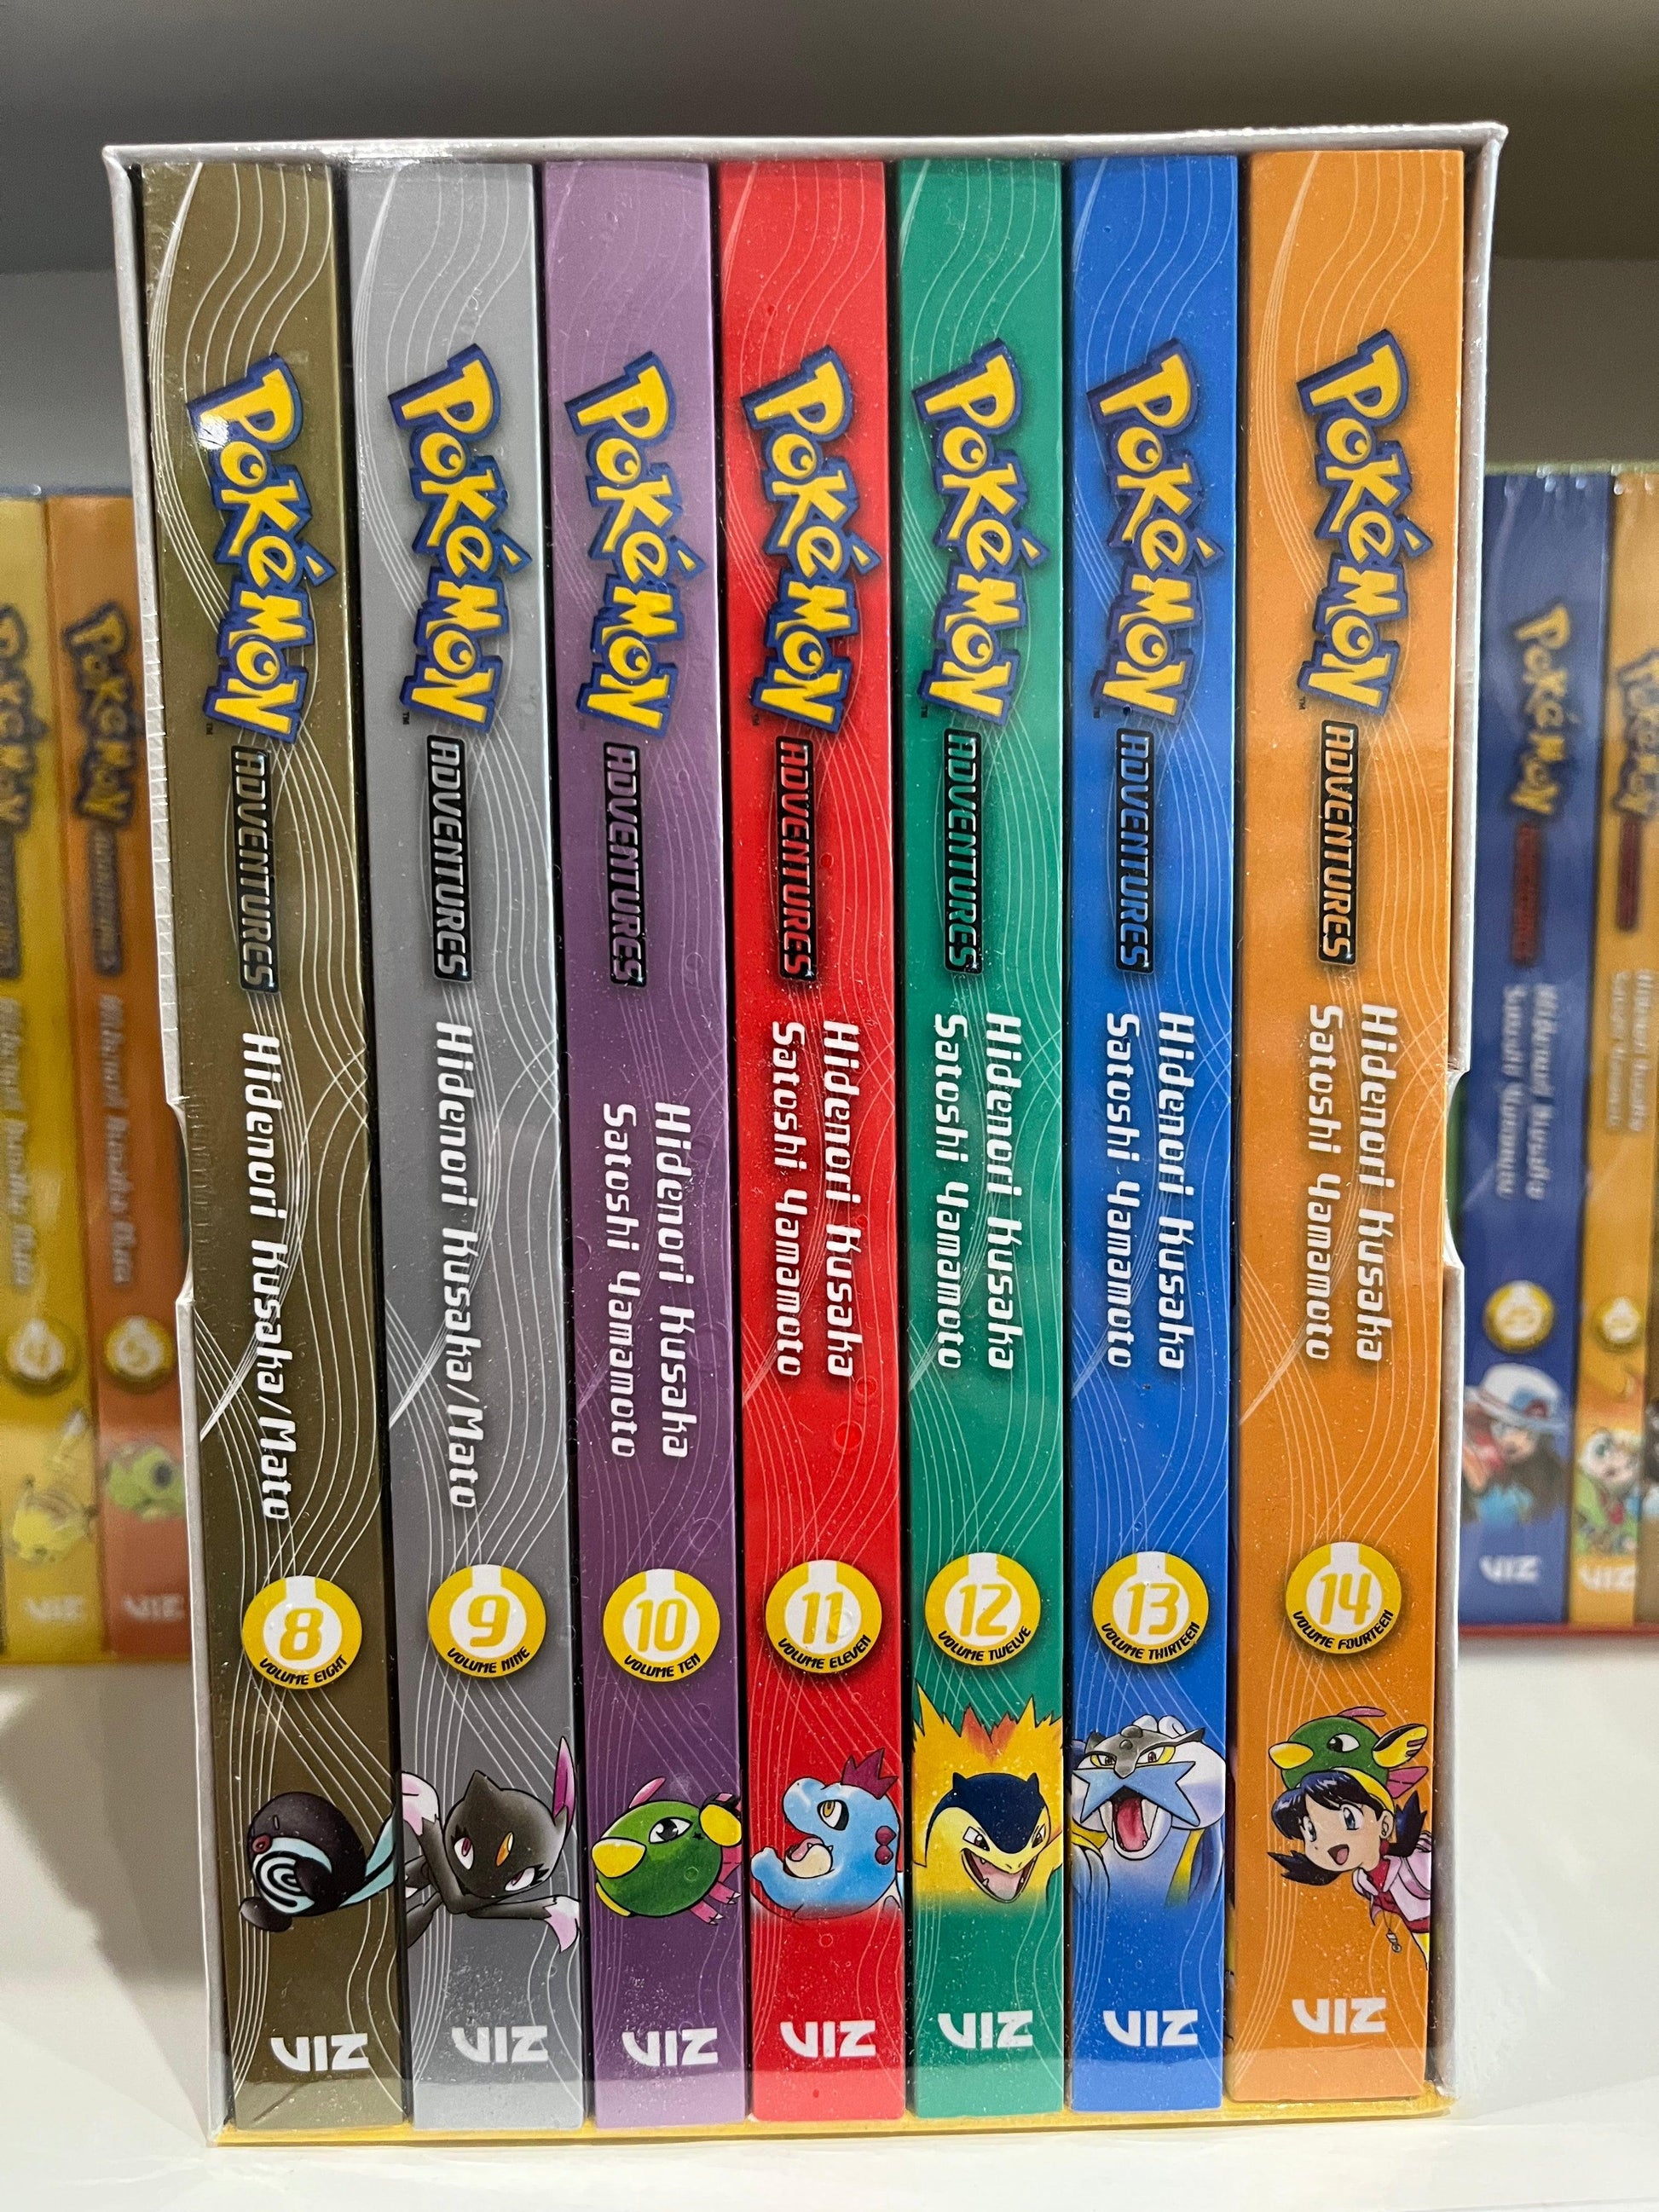 Pokémon Adventures v. 8-14 Gold & Silver Box Set - Anime Island CA